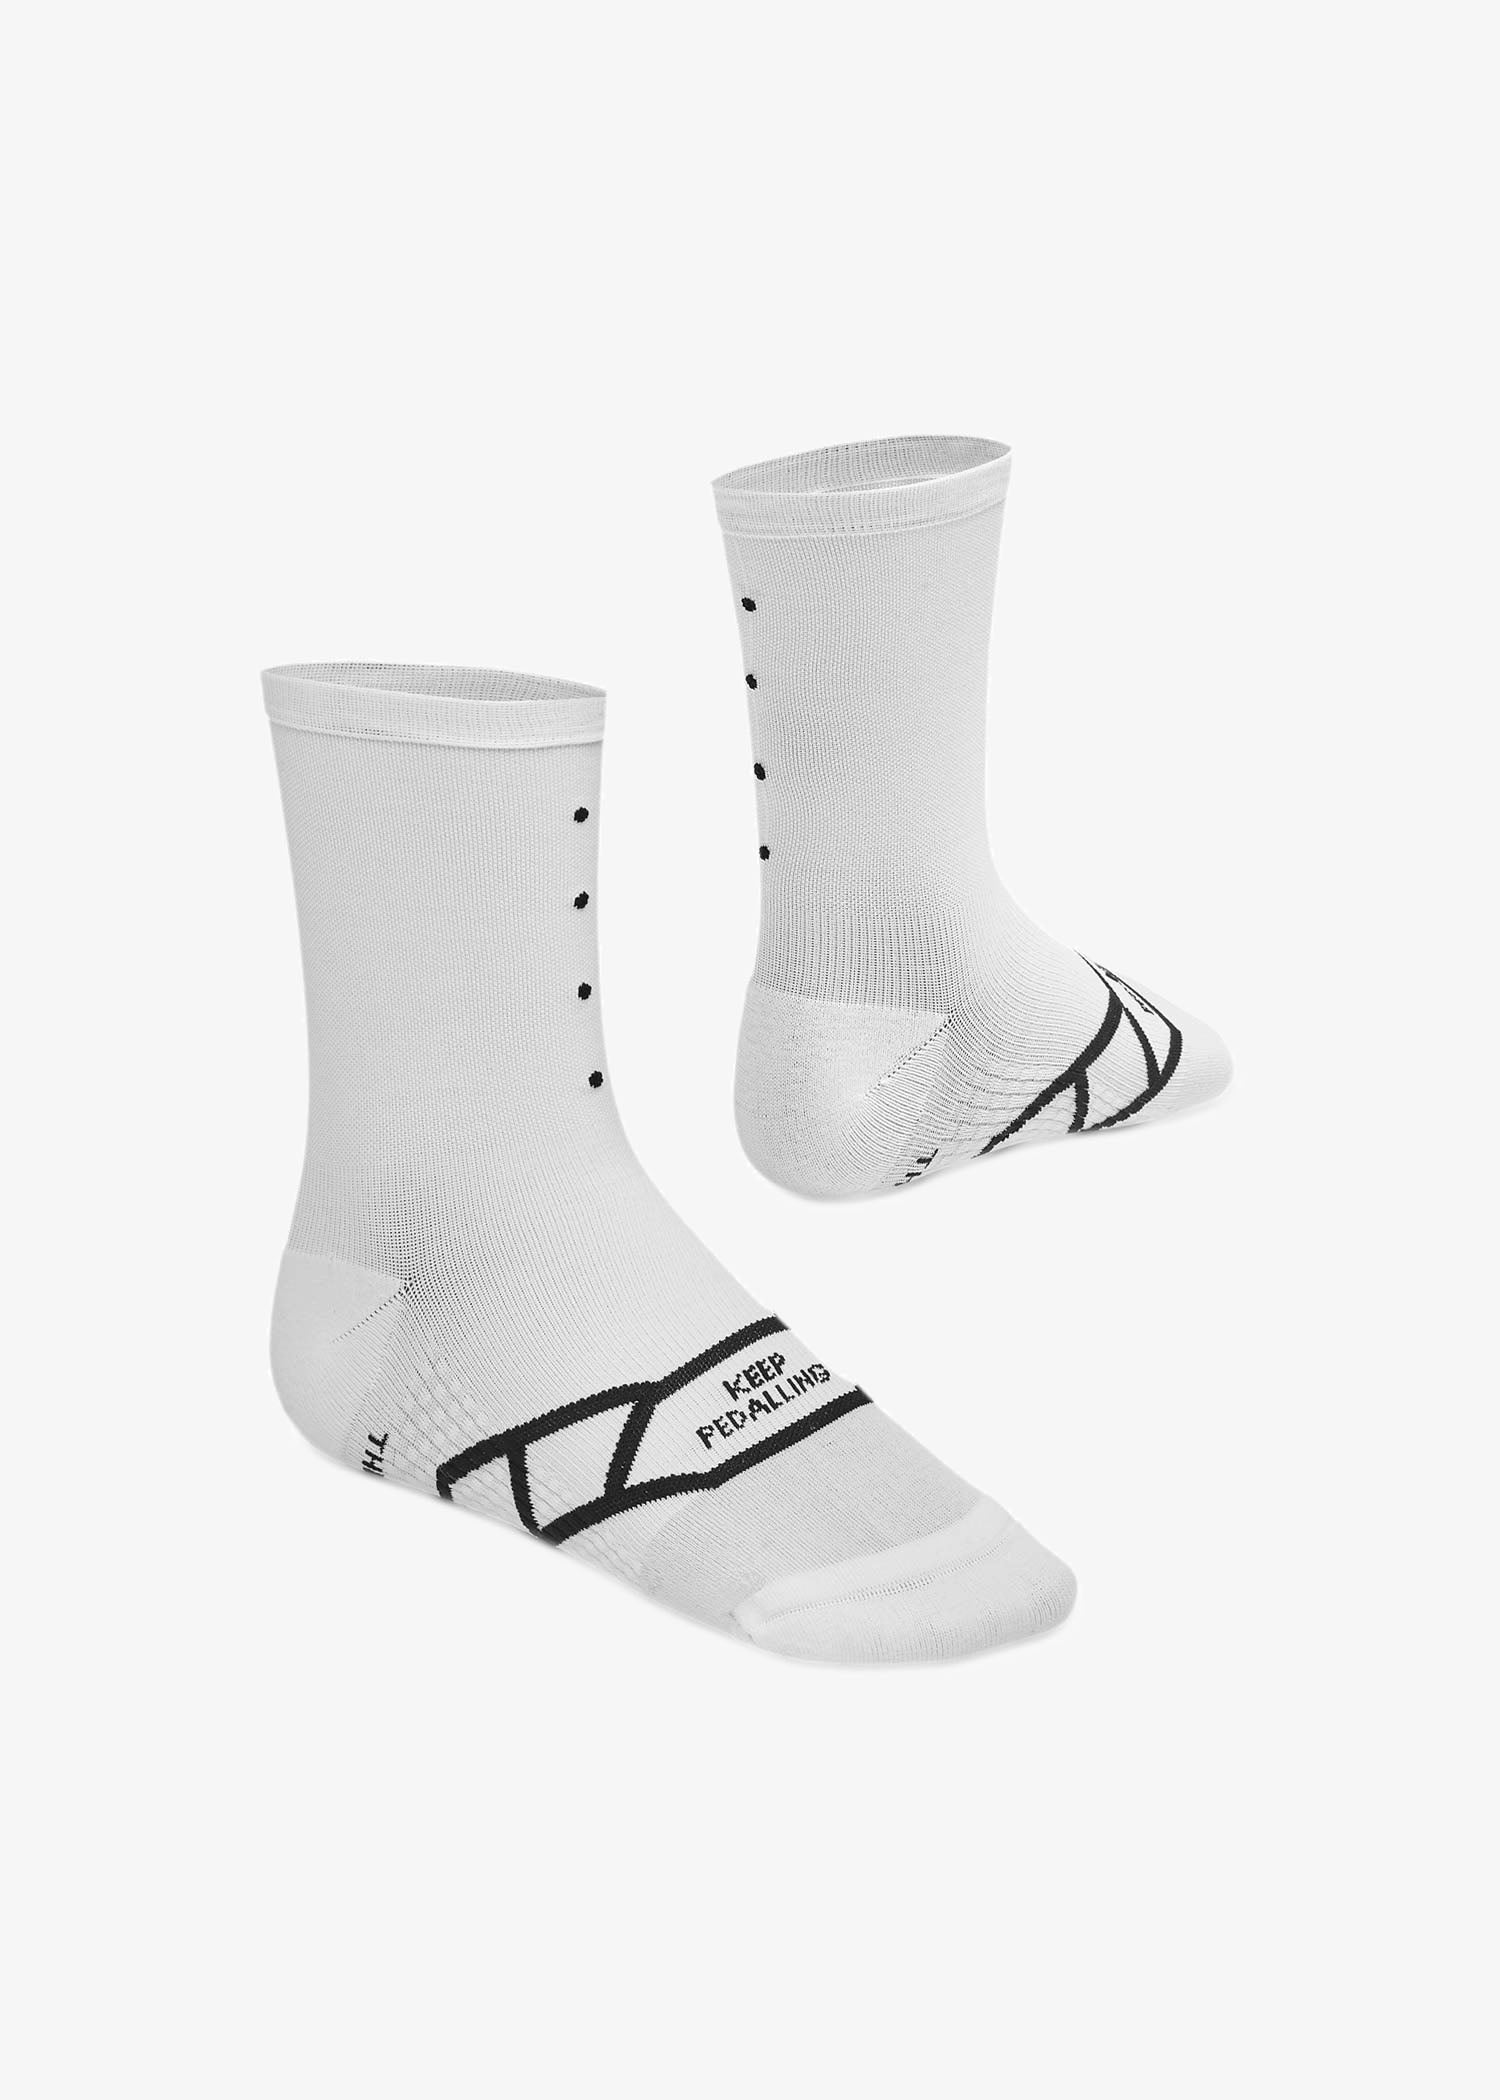 Pedla's Cycling Socks: Boost Performance & Style – The Pedla